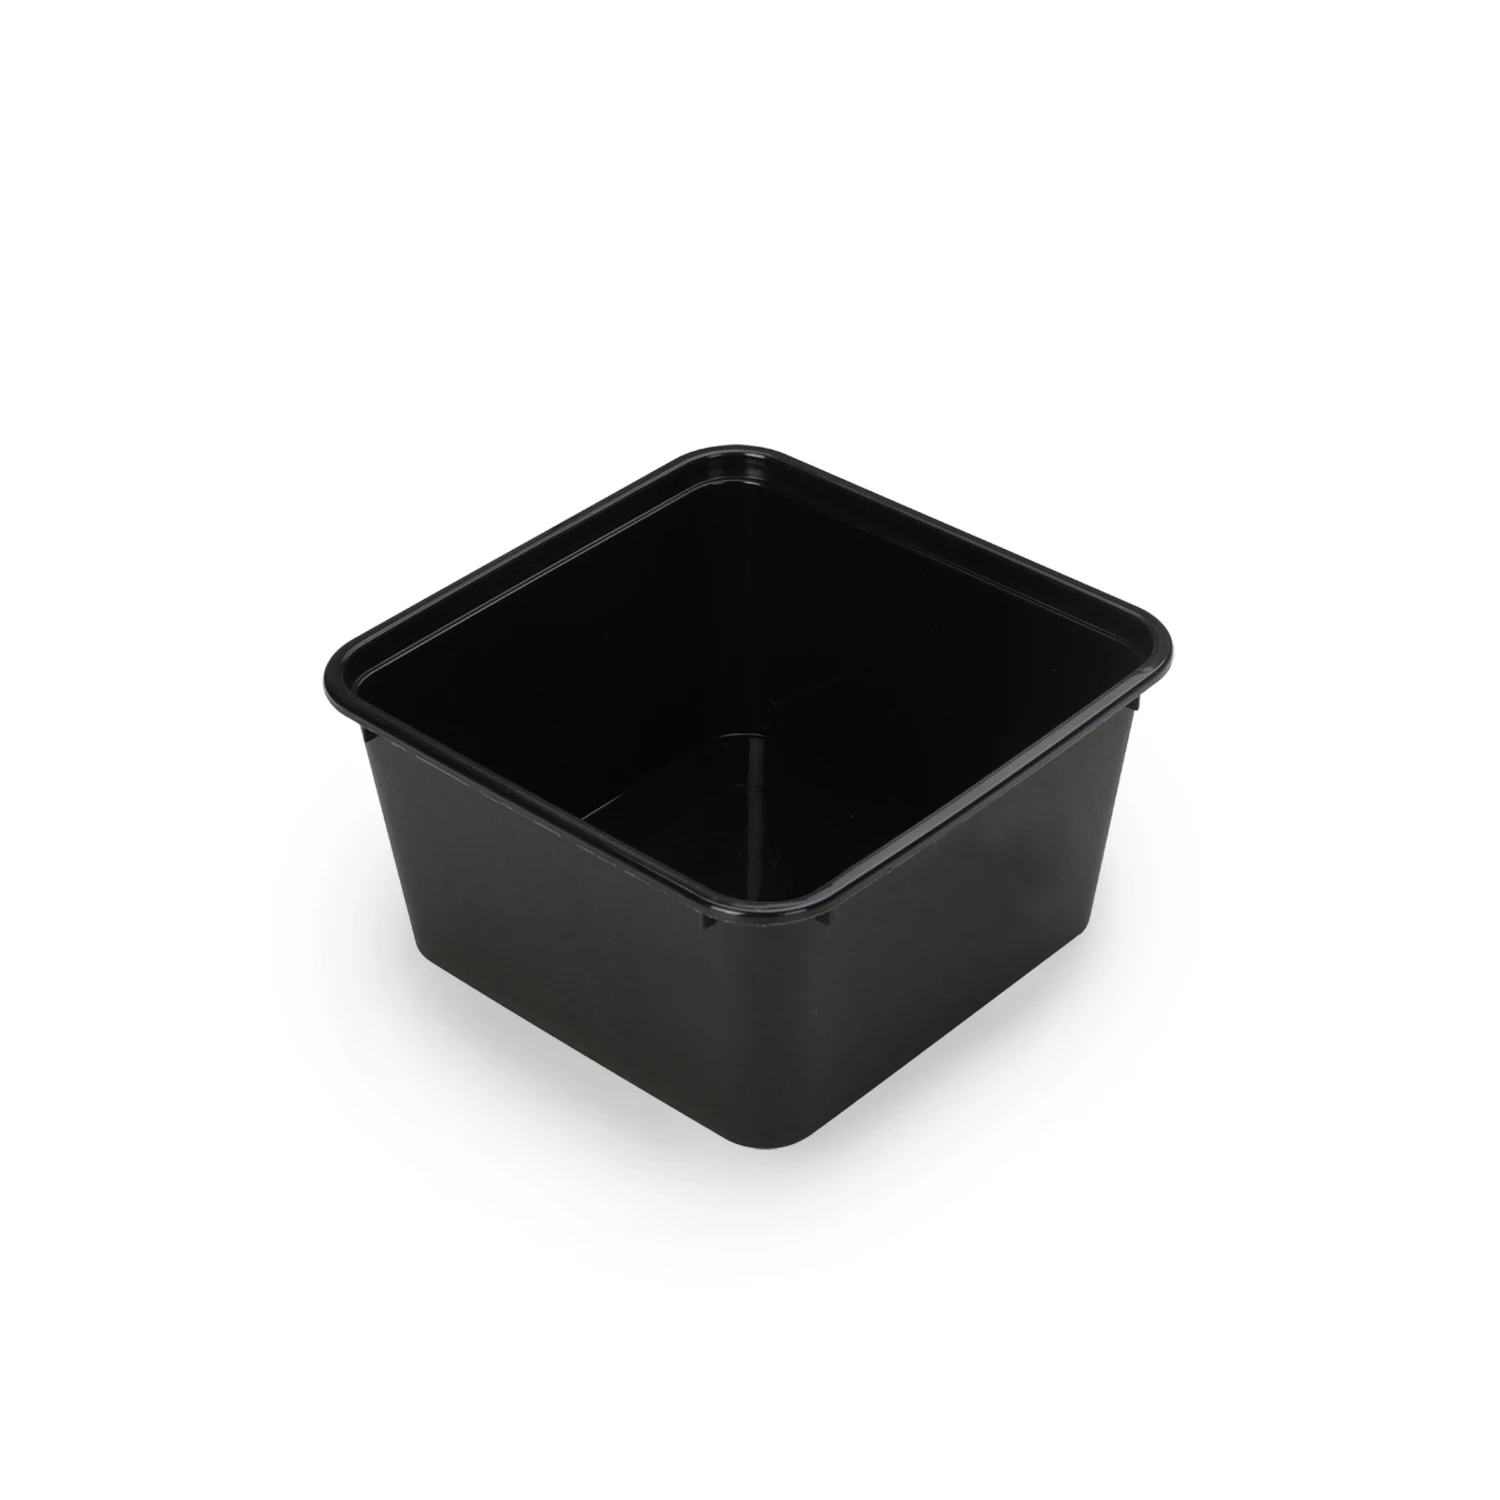 Download Sz-618 Small Size Silver Food Box Mini Square Plastic Container With Lid - Buy Mini Square ...